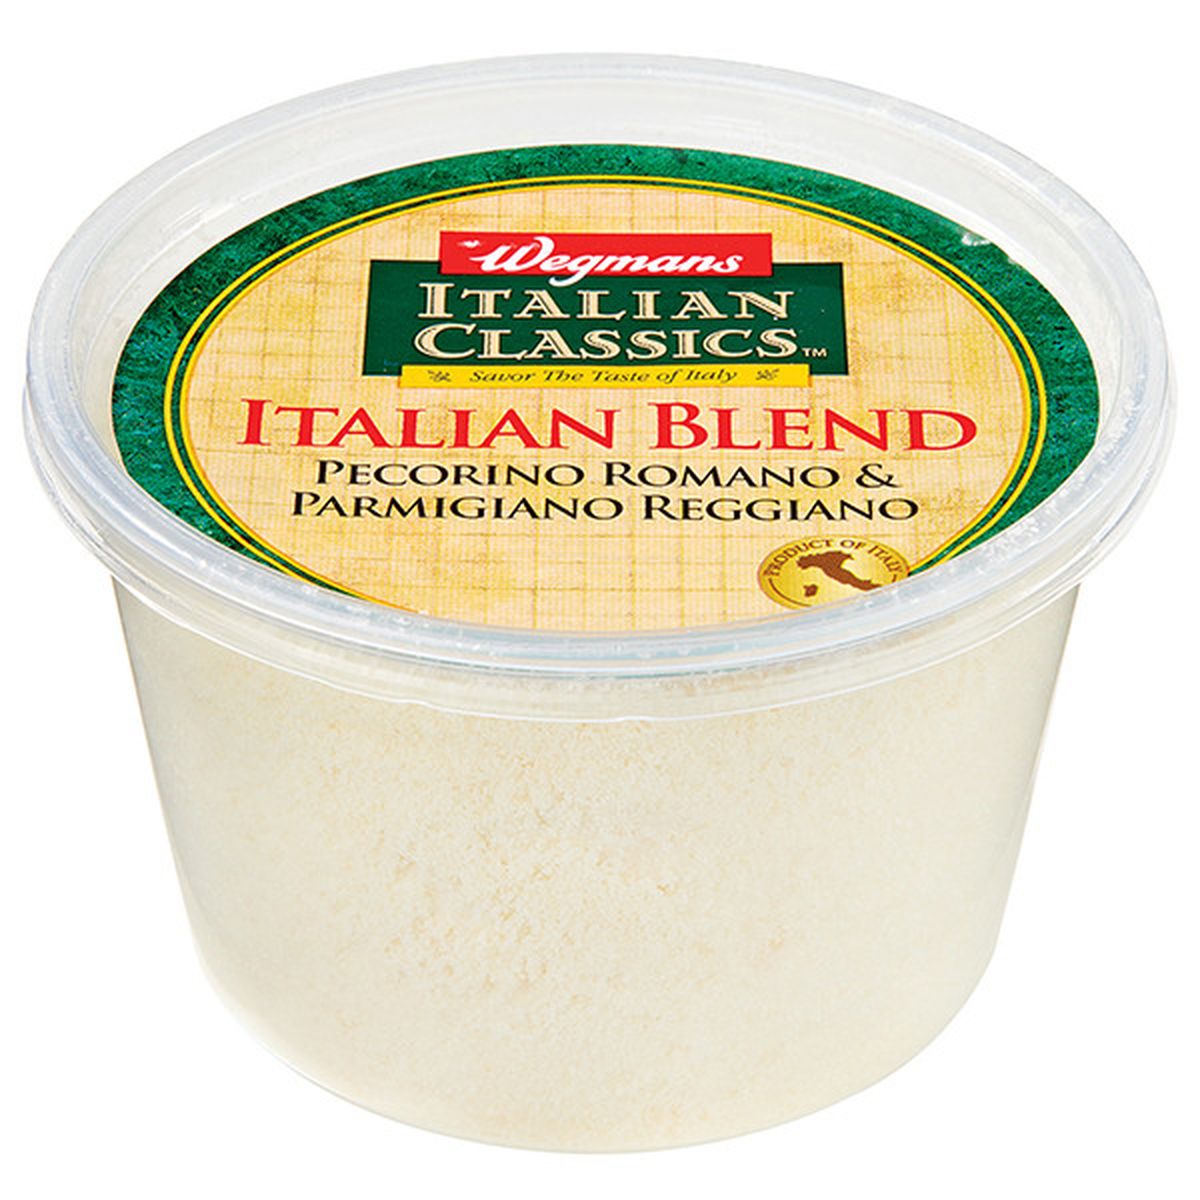 Calories in Wegmans Italian Classics Italian Blend Cheese- Grated